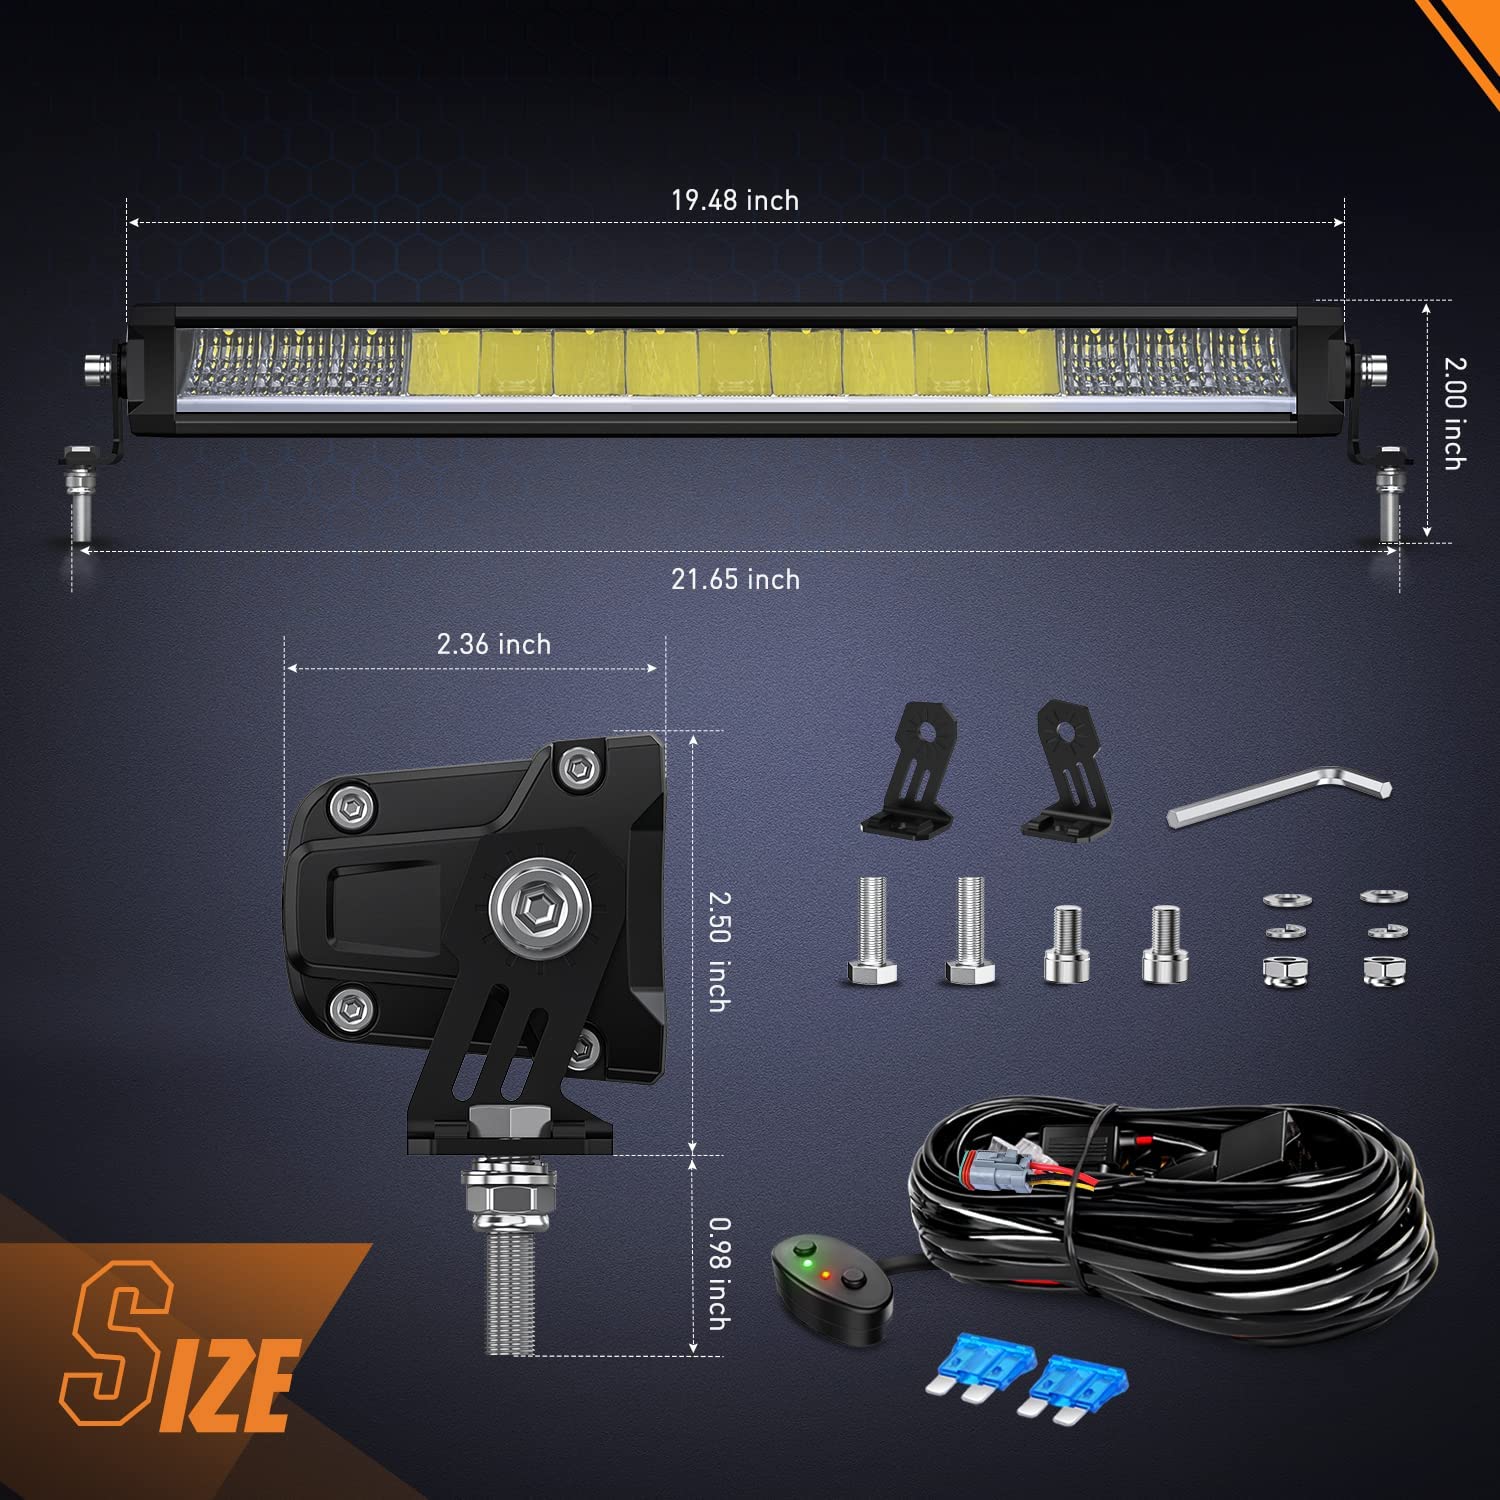 19.5" 75W 8045LM Anti-Glare Slim DRL Spot/Flood LED Light Bar Kit | 16AWG Wire DT Switch Nilight